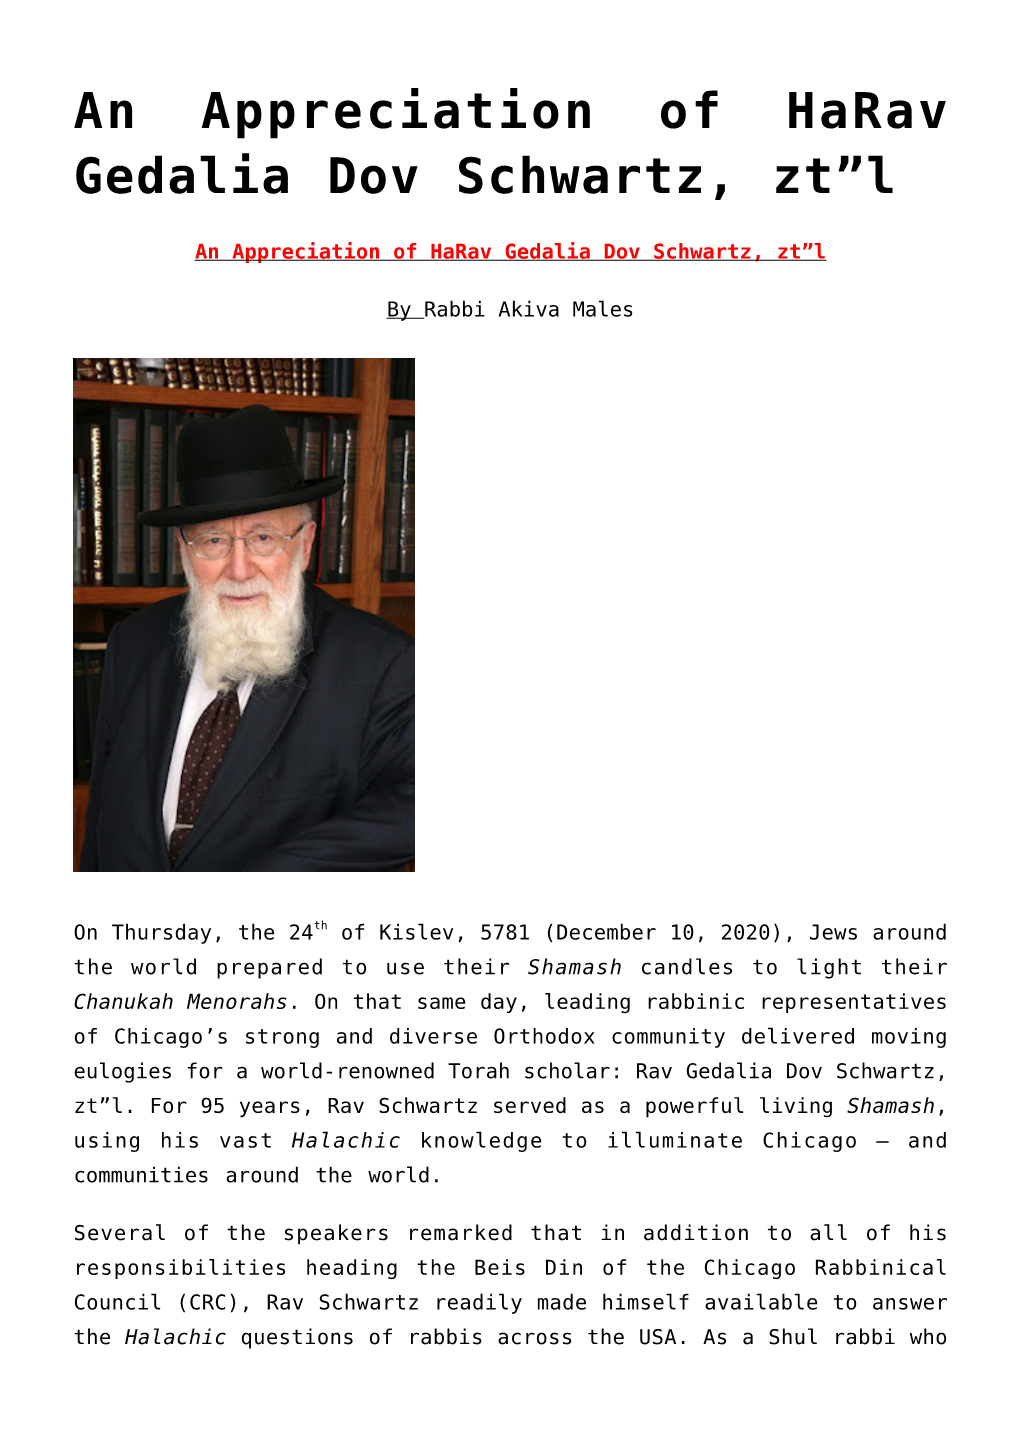 An Appreciation of Harav Gedalia Dov Schwartz, Zt”L,Keser Vs. Kesher